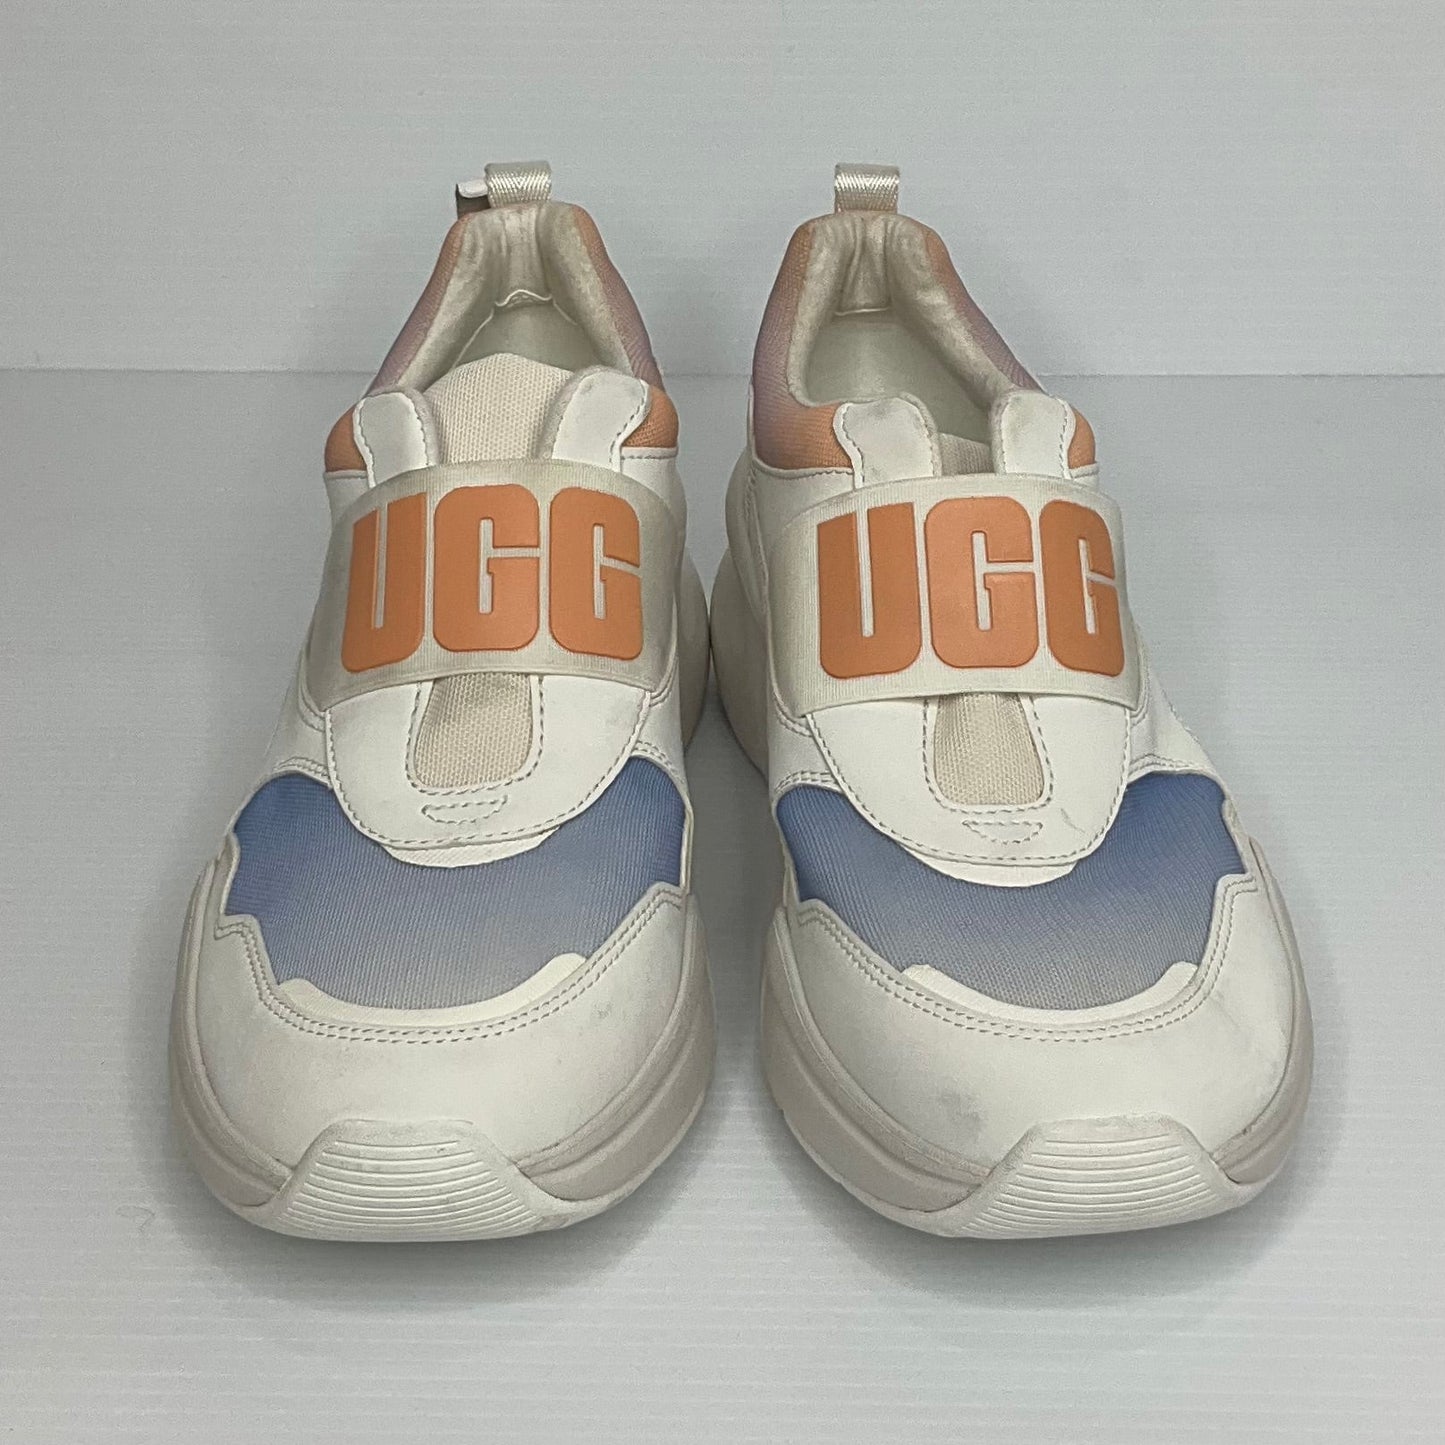 White Blue Shoes Athletic Ugg, Size 9.5